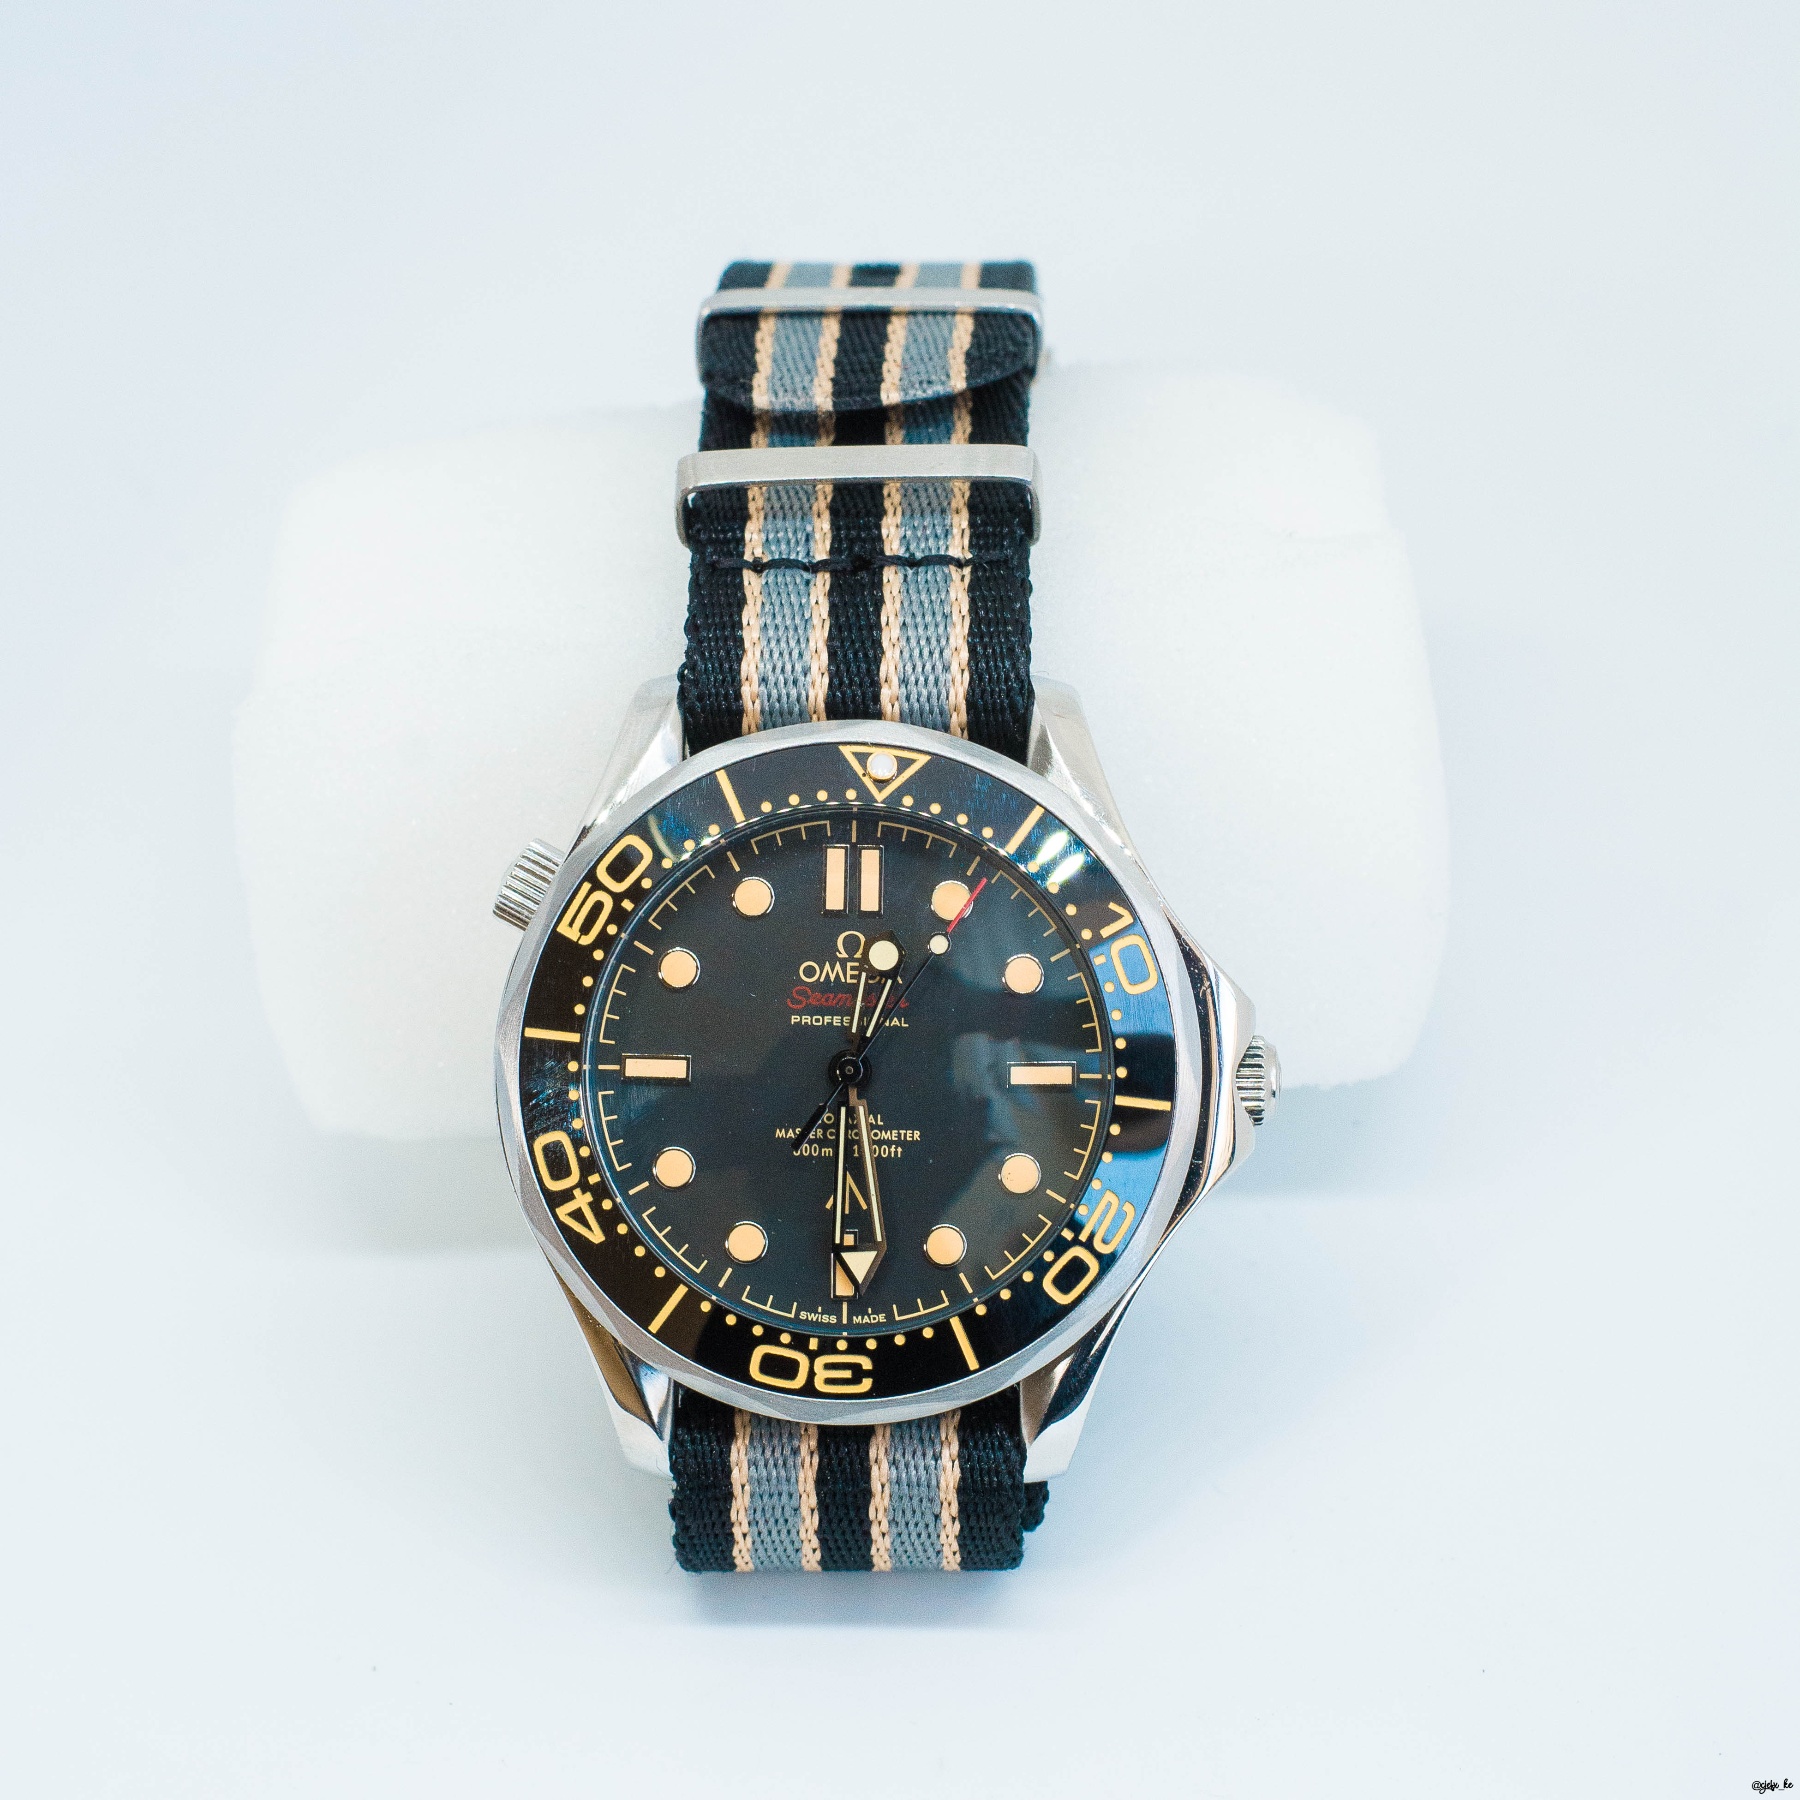 Omega sea master diver 300 meters James bond Nato straps watch for sale in Nairobi Kenya at trendsasa